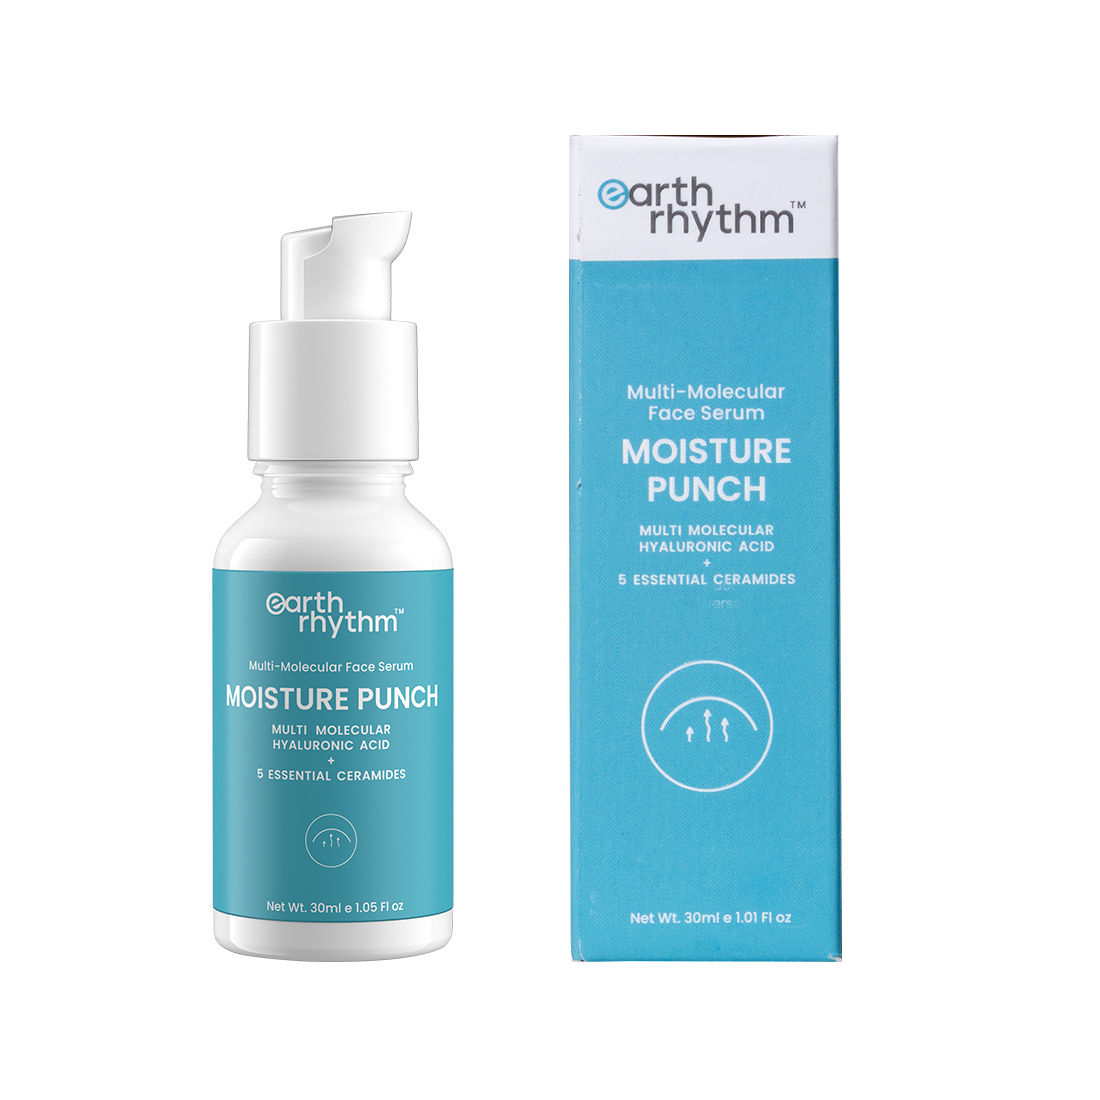 Buy Earth Rhythm Moisture Punch Multi-Molecular Hyaluronic Acid Serum | Repairs & Nourishes Damaged Skin, Hydrates Skin, Locks Moisture | for All Skin Types | Men & Women - 30 ML - Purplle